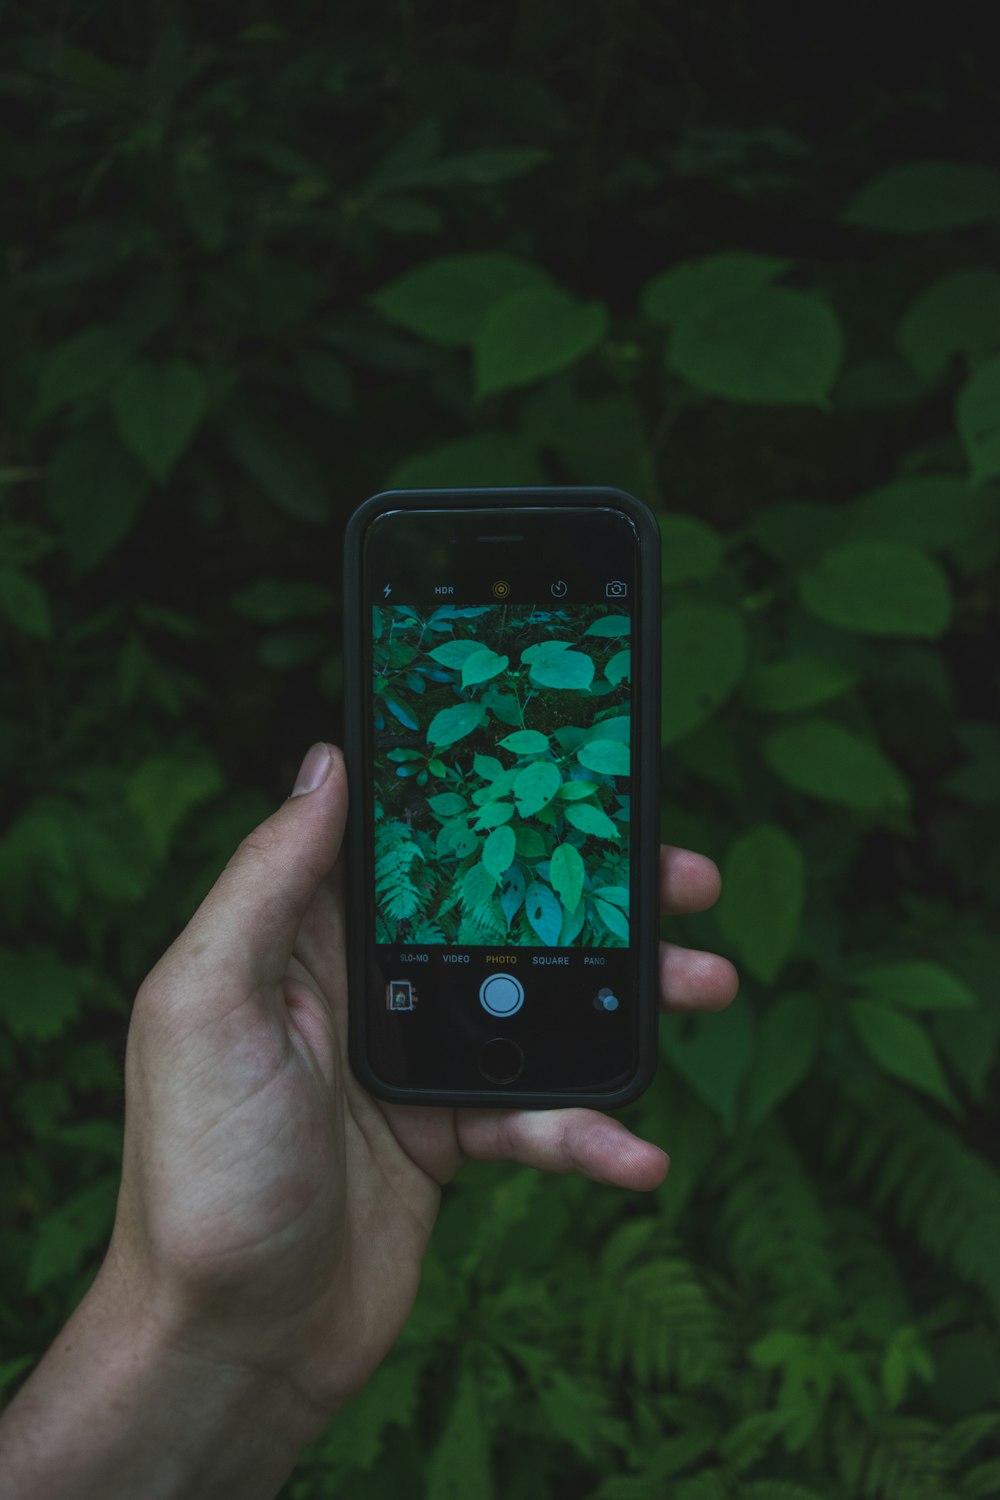 iPhone 5s gris espacial tomando foto de hoja verde